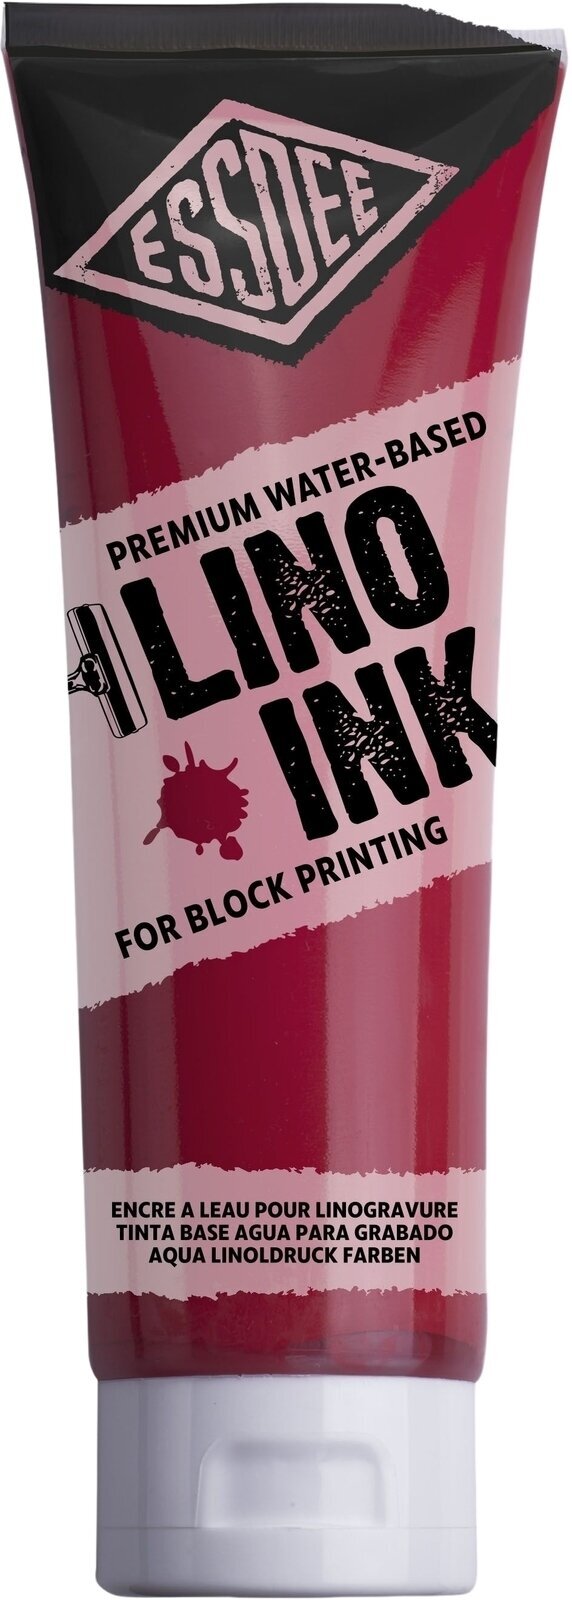 Farba do linorytu Essdee Block Printing Ink Farba do linorytu Brilliant Red (Scarlet) 300 ml